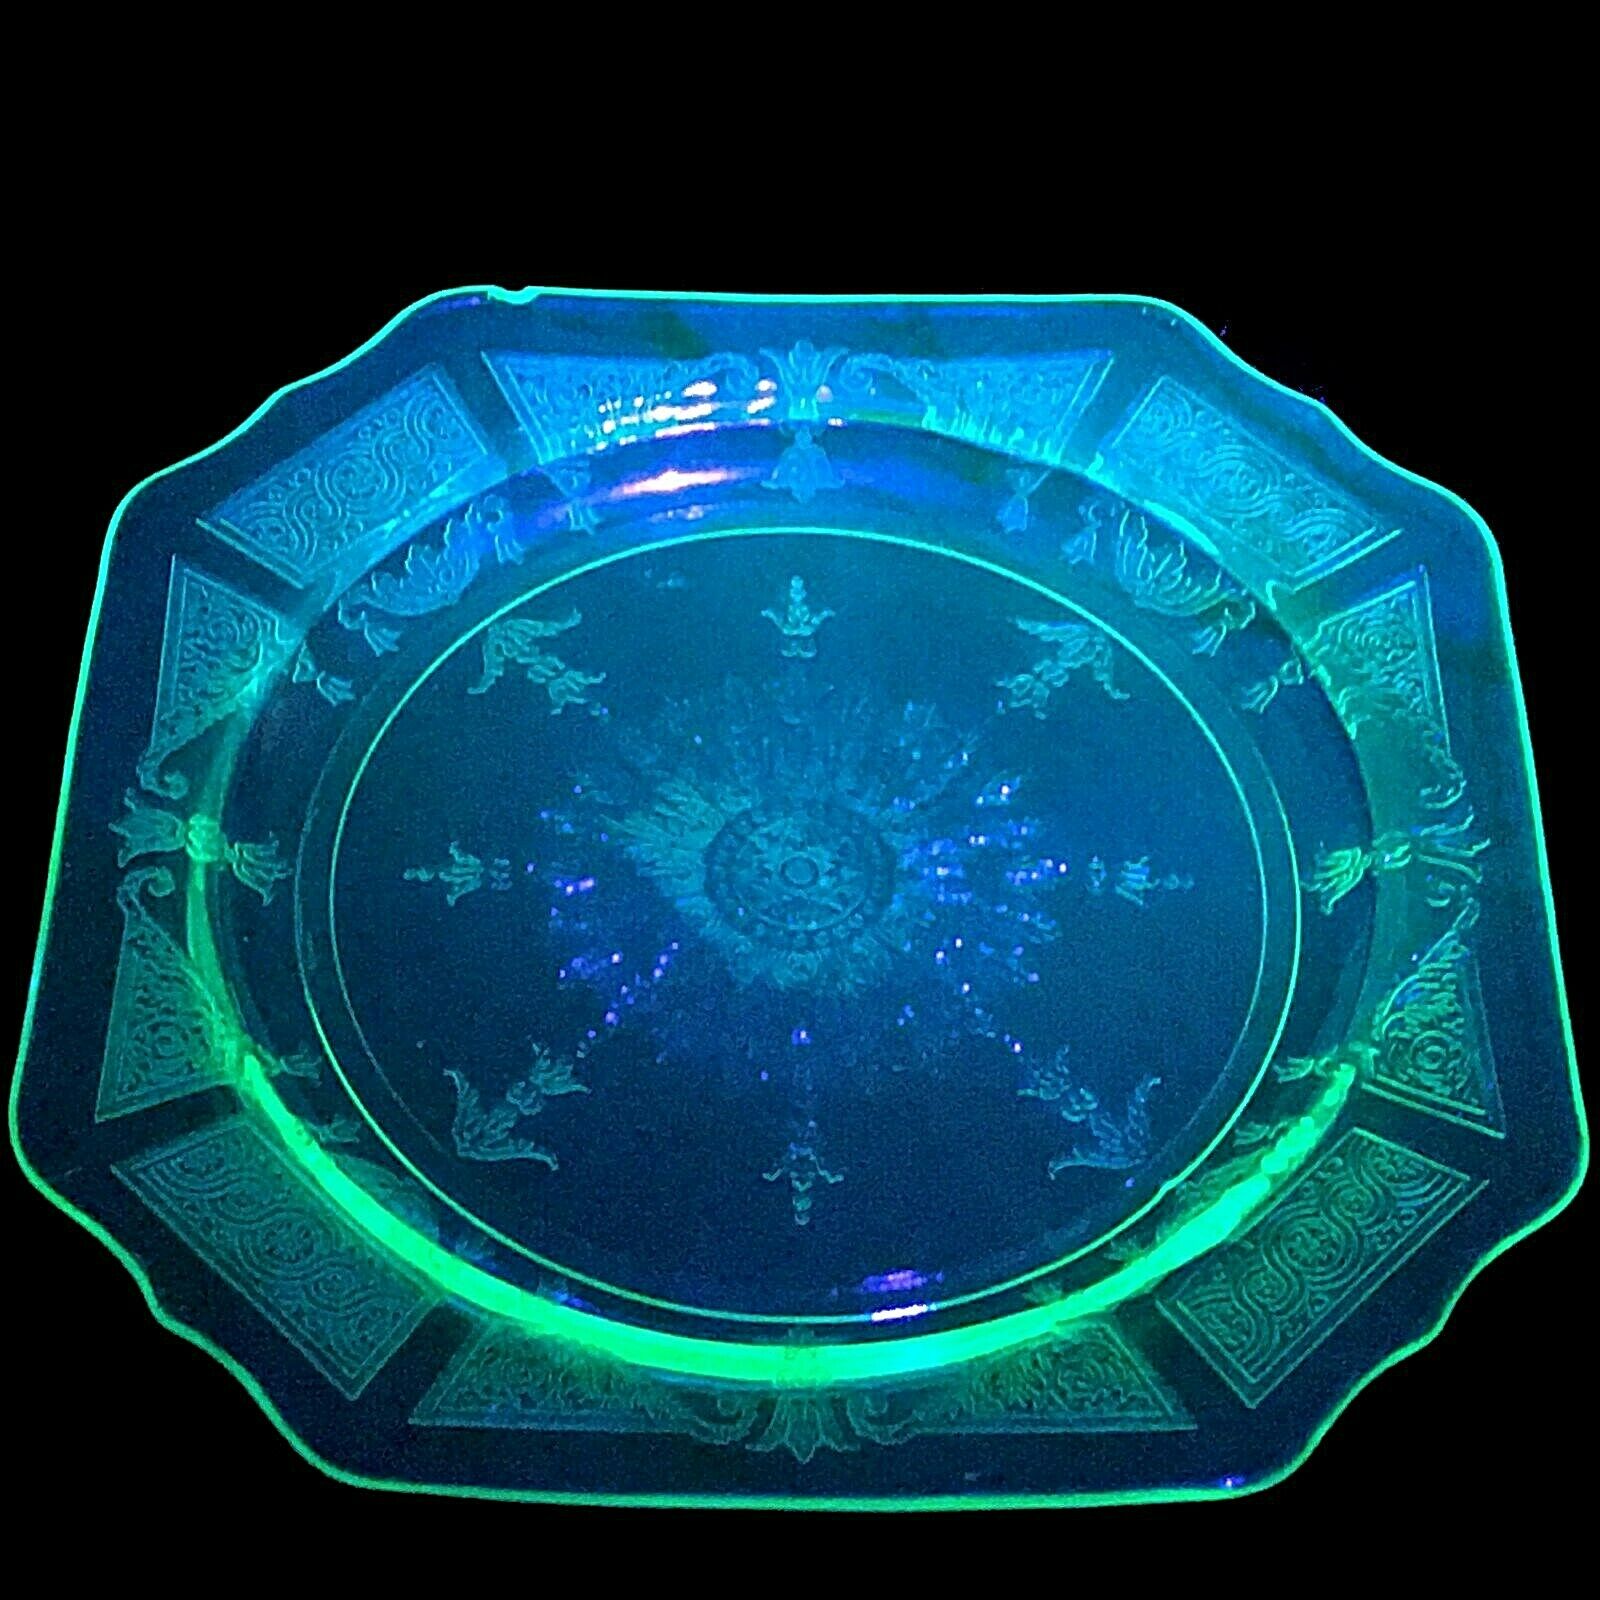 Hocking's Princess Green Depression Glass, Square Plate (uranium Vaseline)